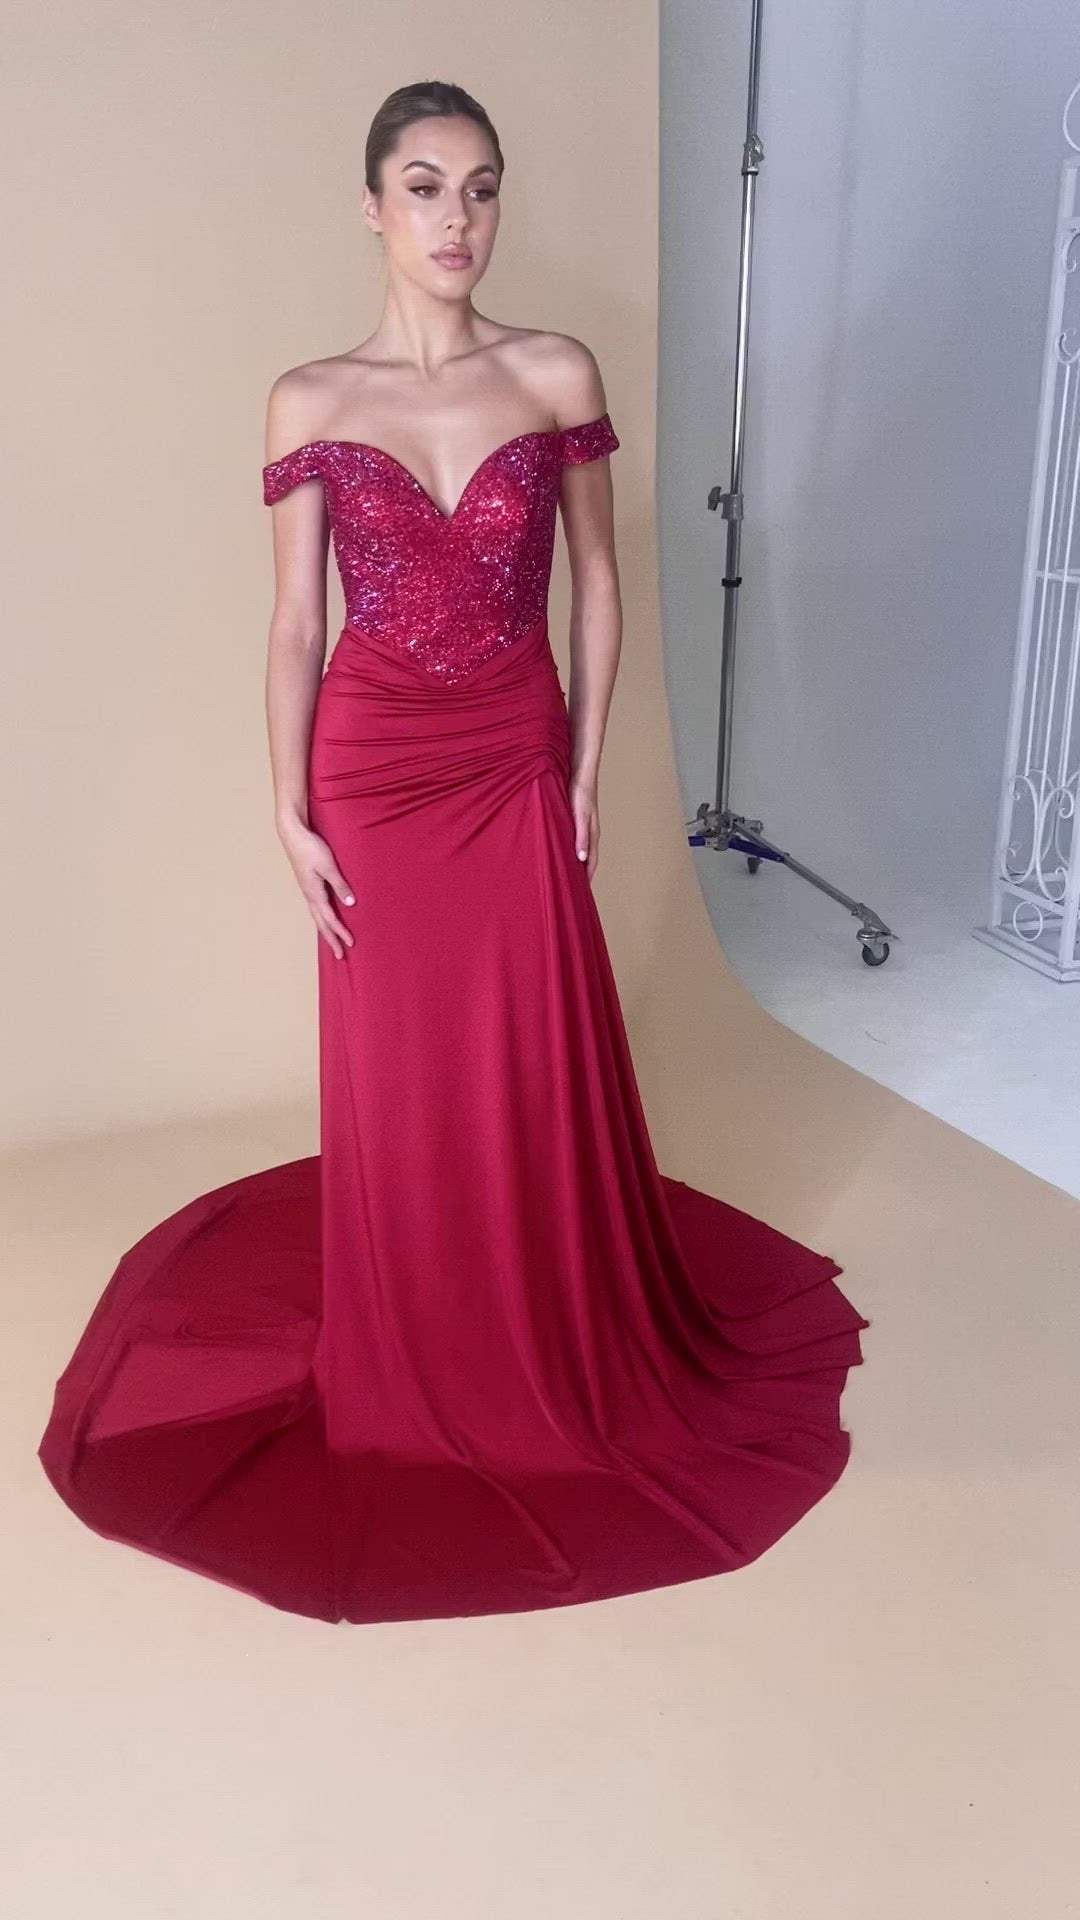 Portia & Scarlett Finola Gown PS21232 | Red Prom | Evening Gown Model Video MP4